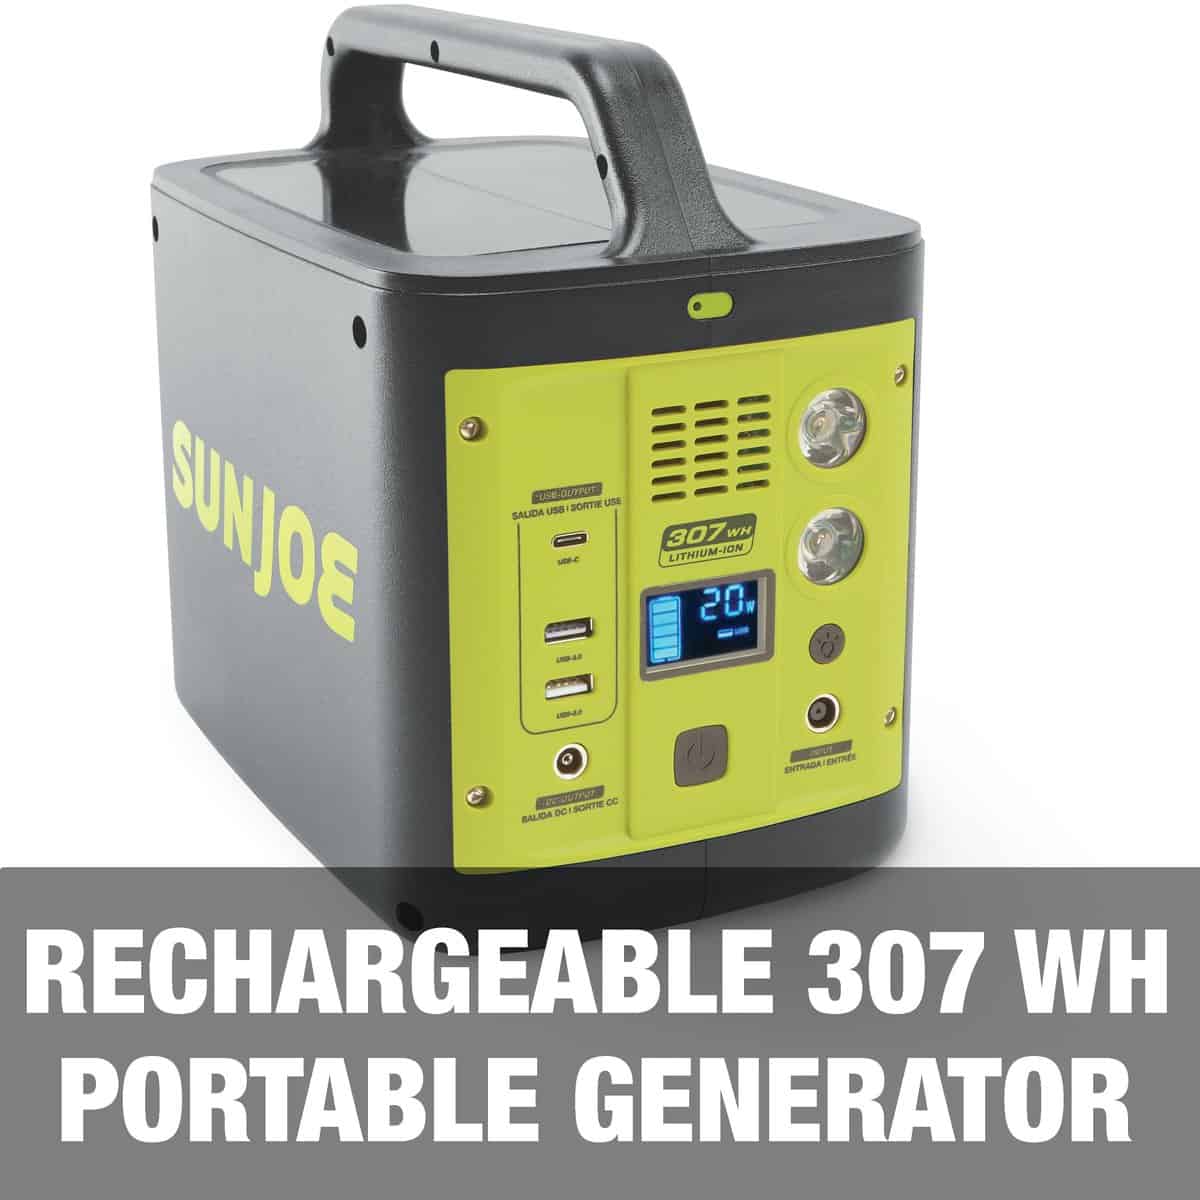 Portable Generator Environmental Impact.